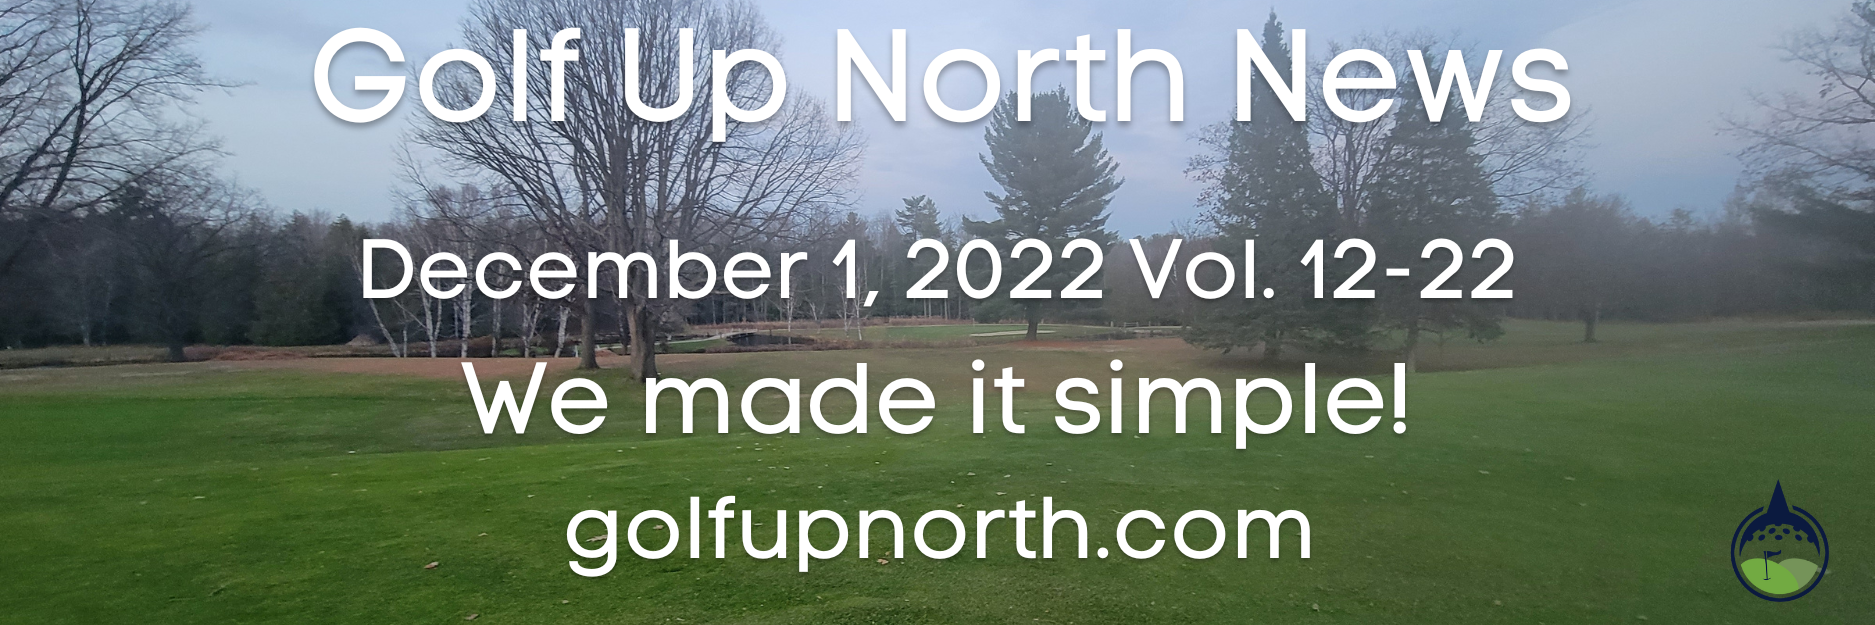 December 1, 2022 Golf Up North Newsletter Banner